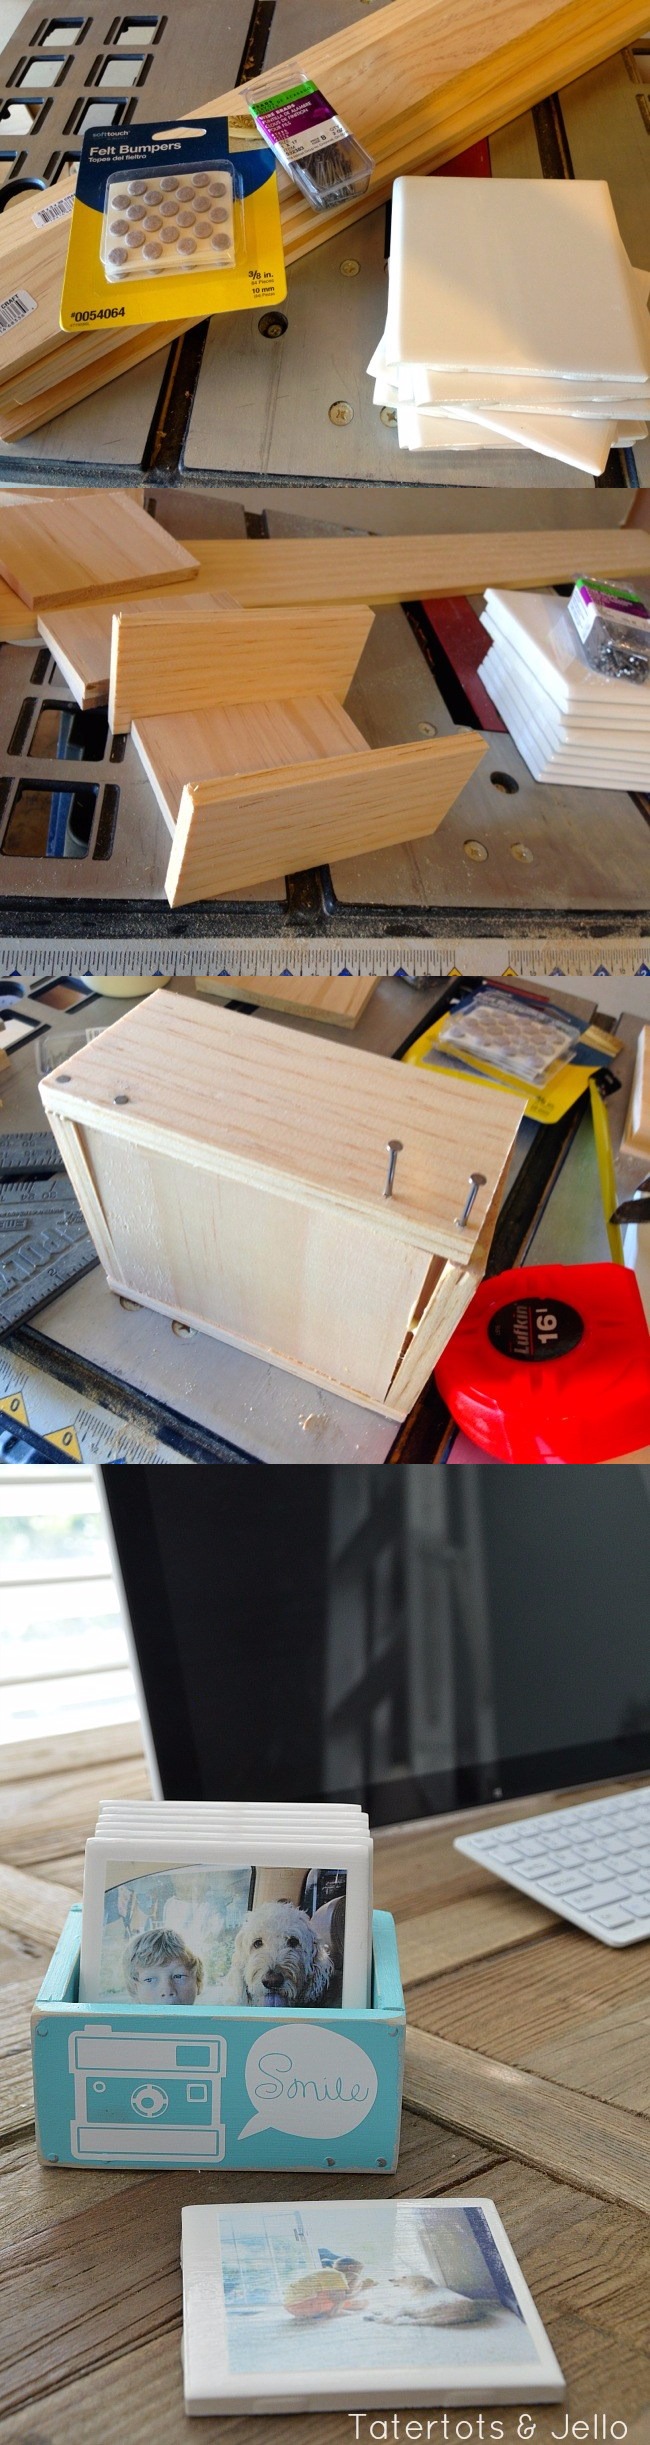 DIY Instagram Coasters in Wooden Box